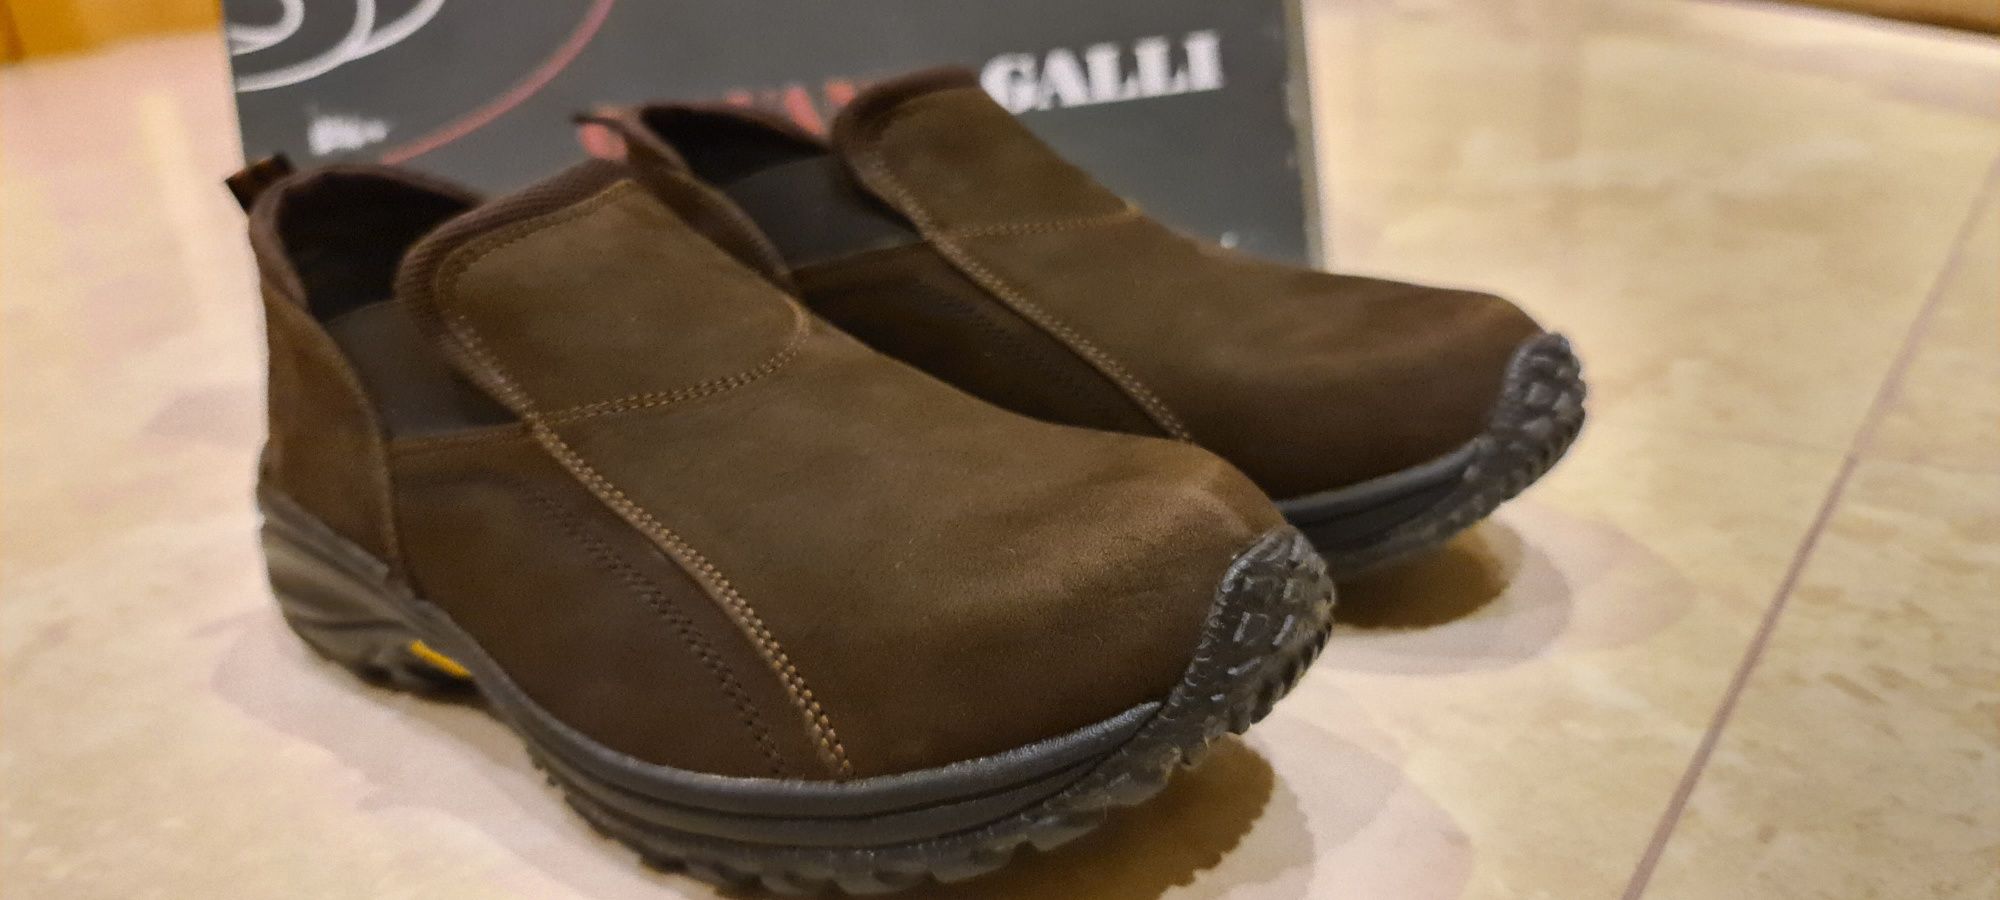 Sapatos Desportivos Giovanni Galli tamanho 39